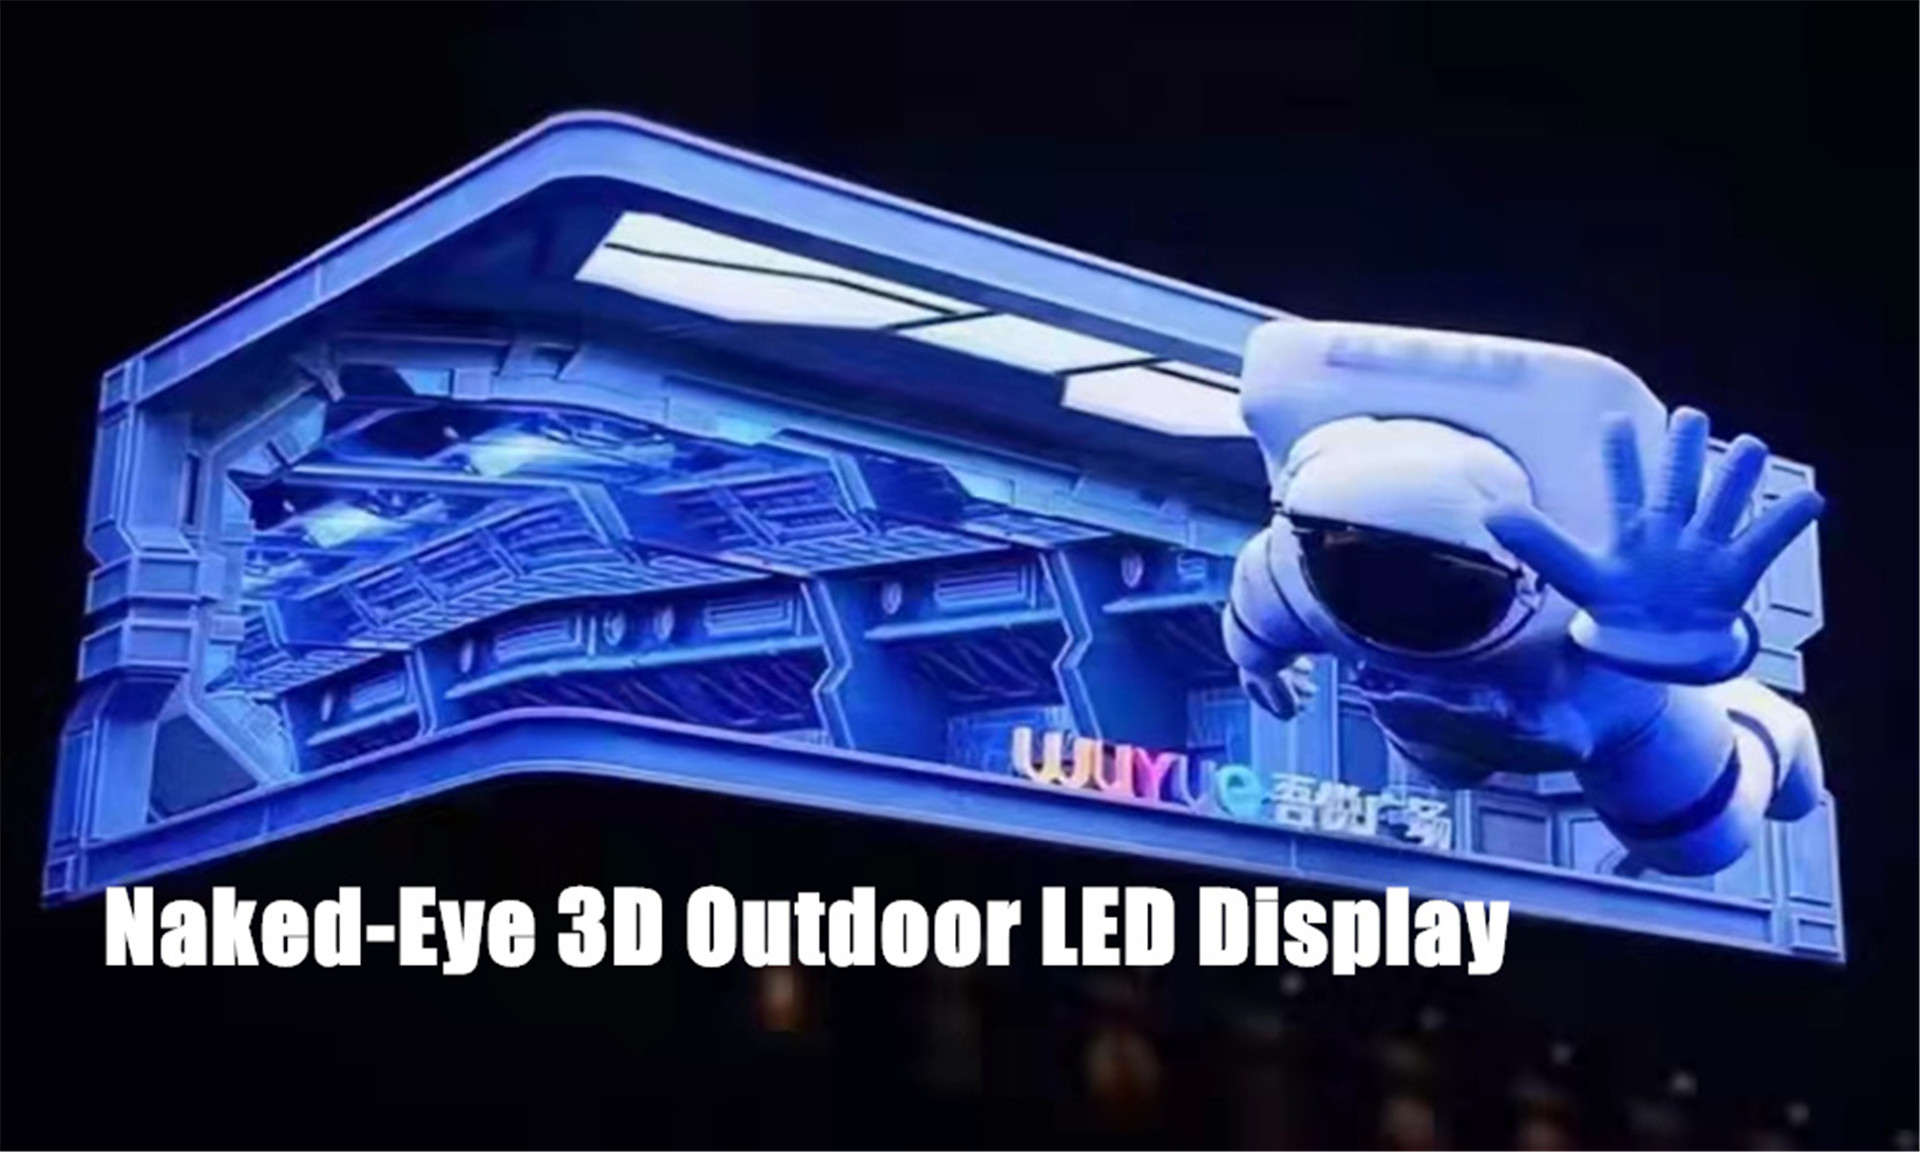 1 blote oog 3D led-display voor buiten